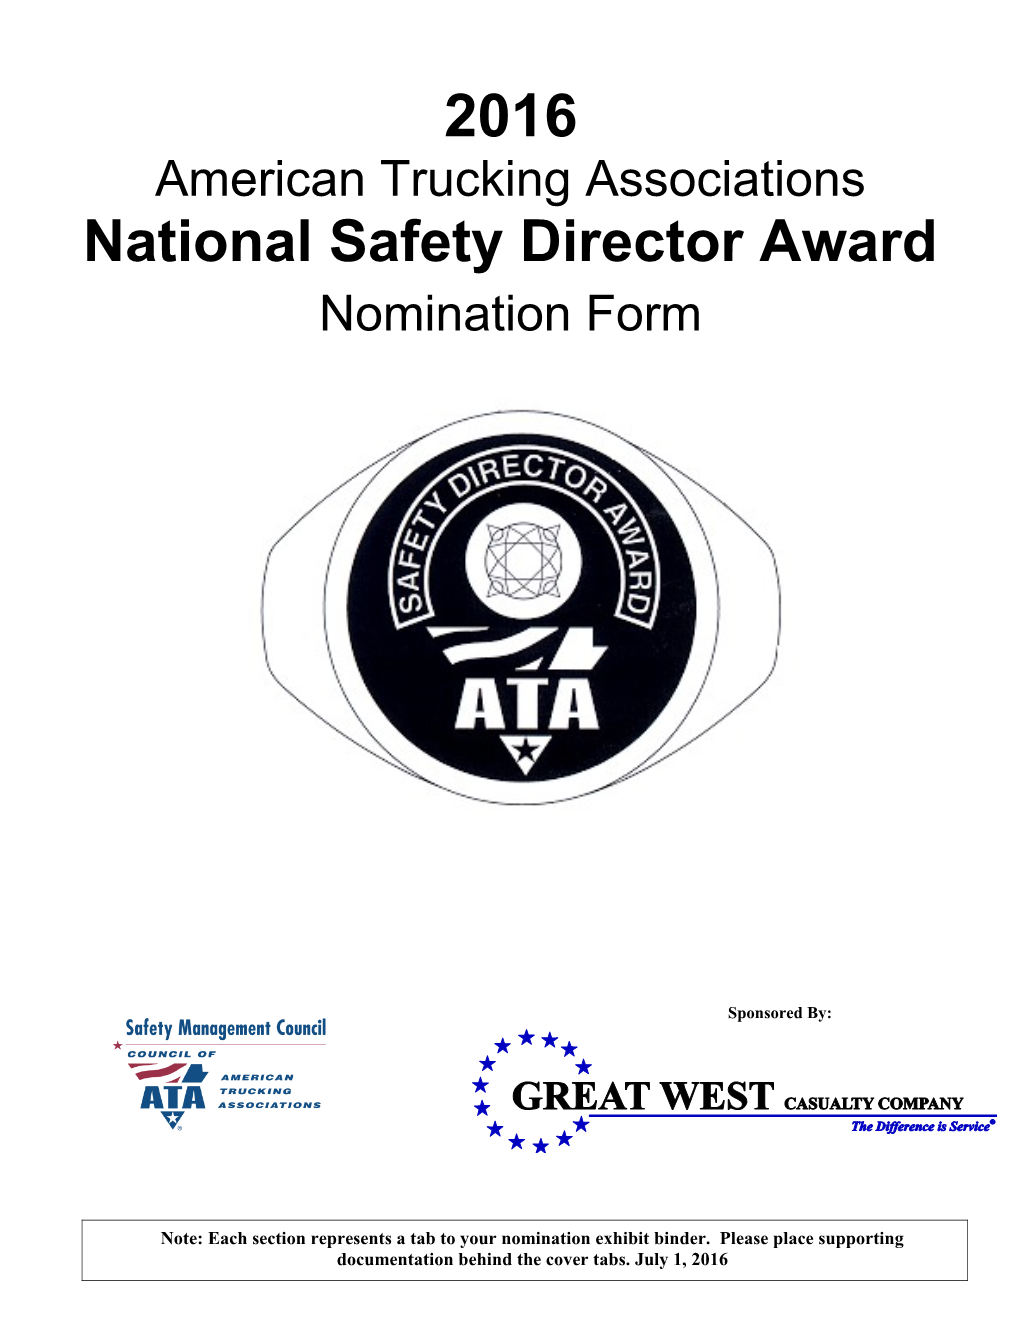 National Safety Director Award